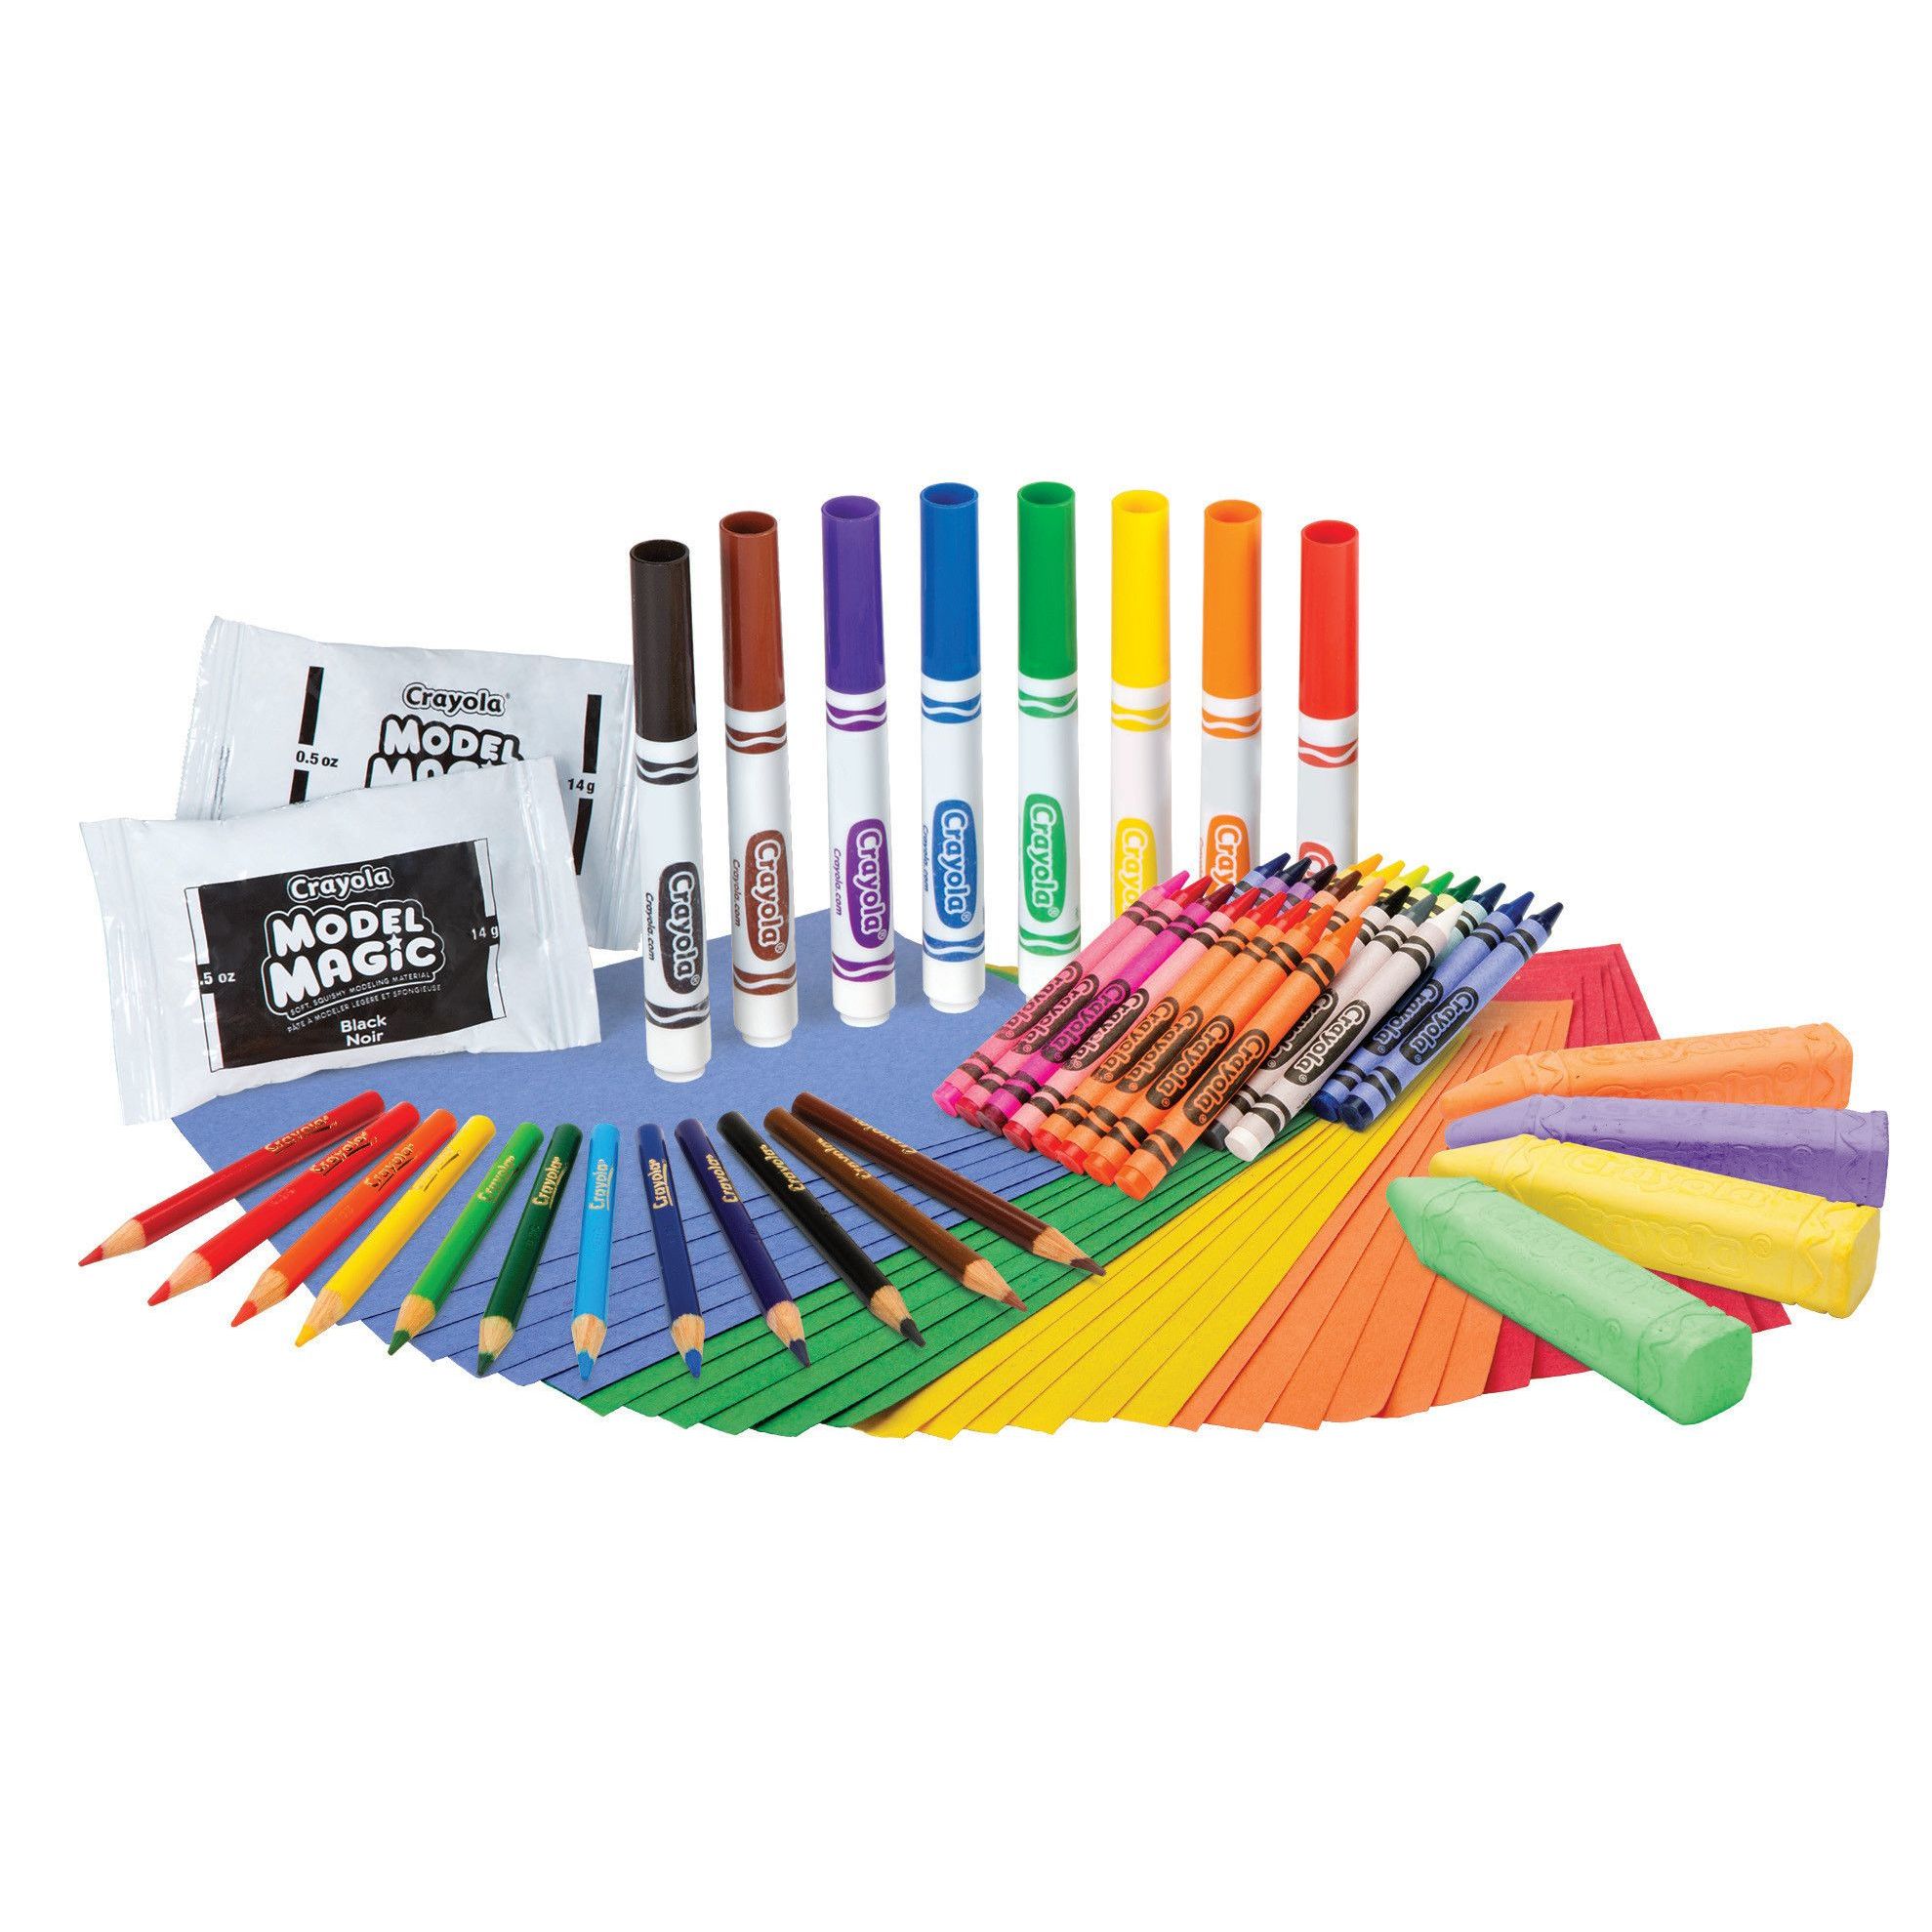 Crayola Creativity Tub Art Set, School Supplies, Ages 5+, 80 Pcs - image 2 of 8